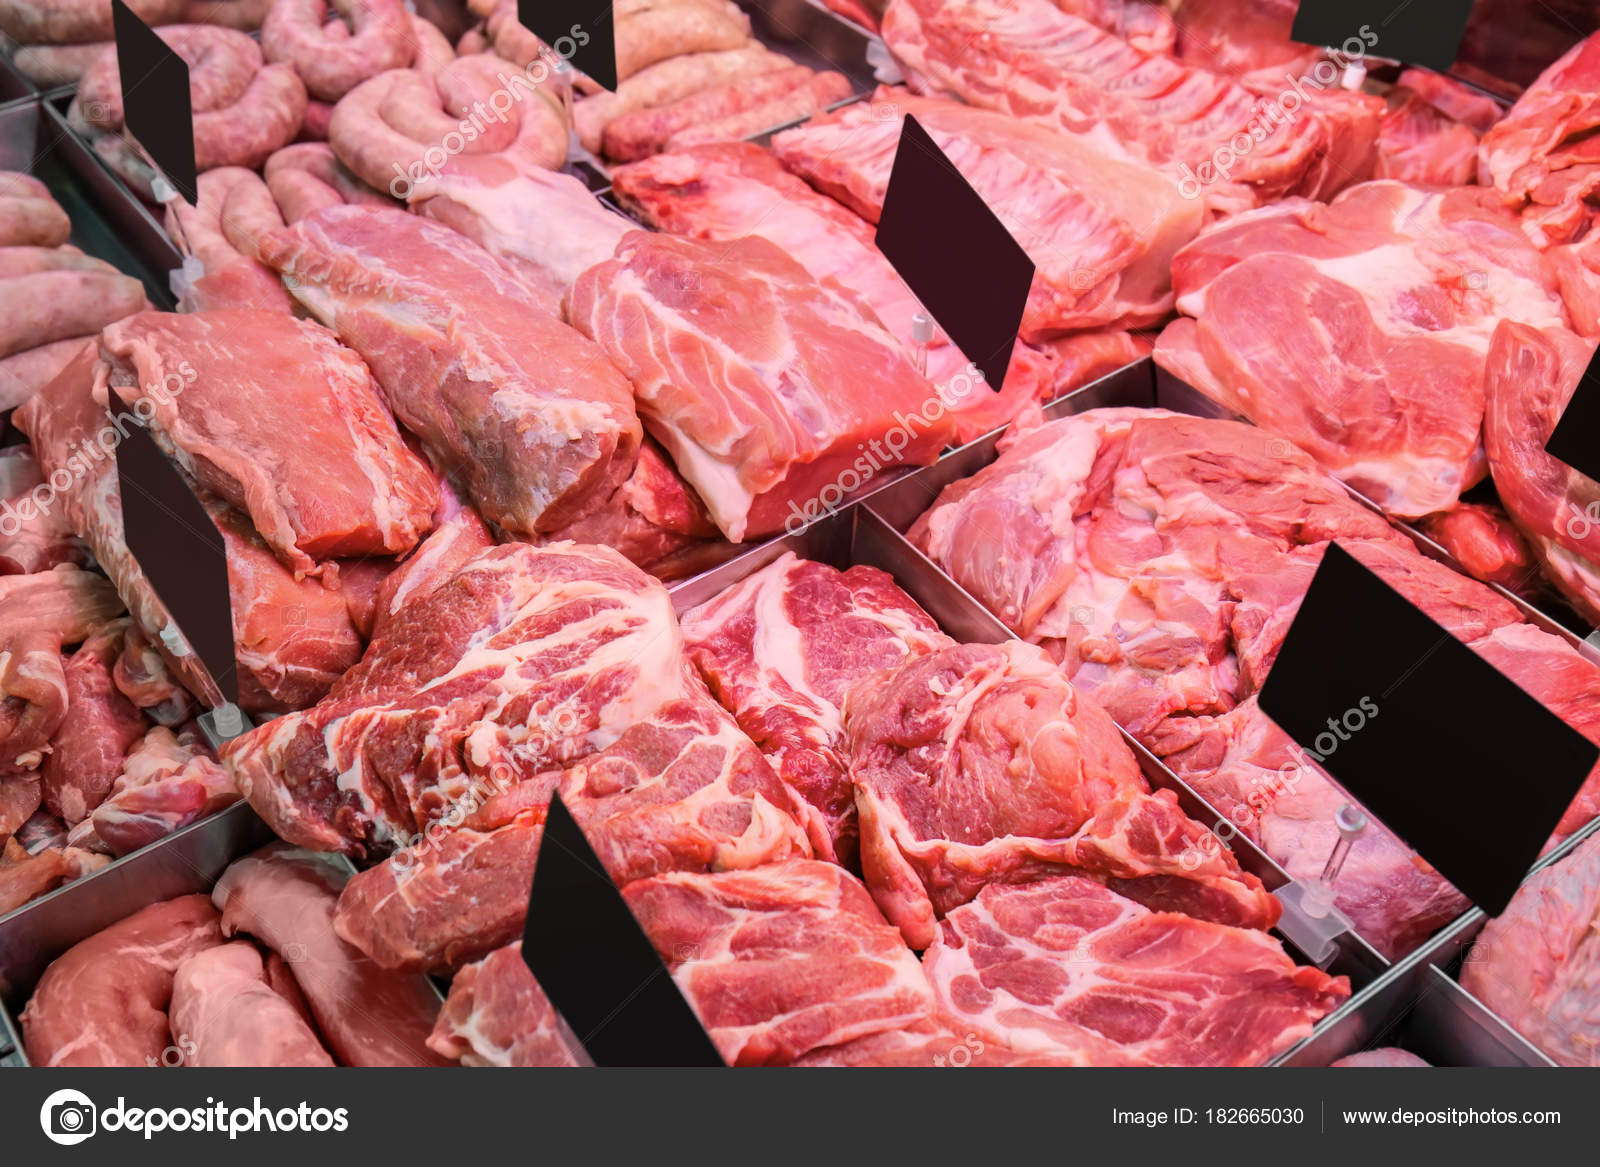 Fresh Meat Hang On Spike Market Stock Photo 357825224